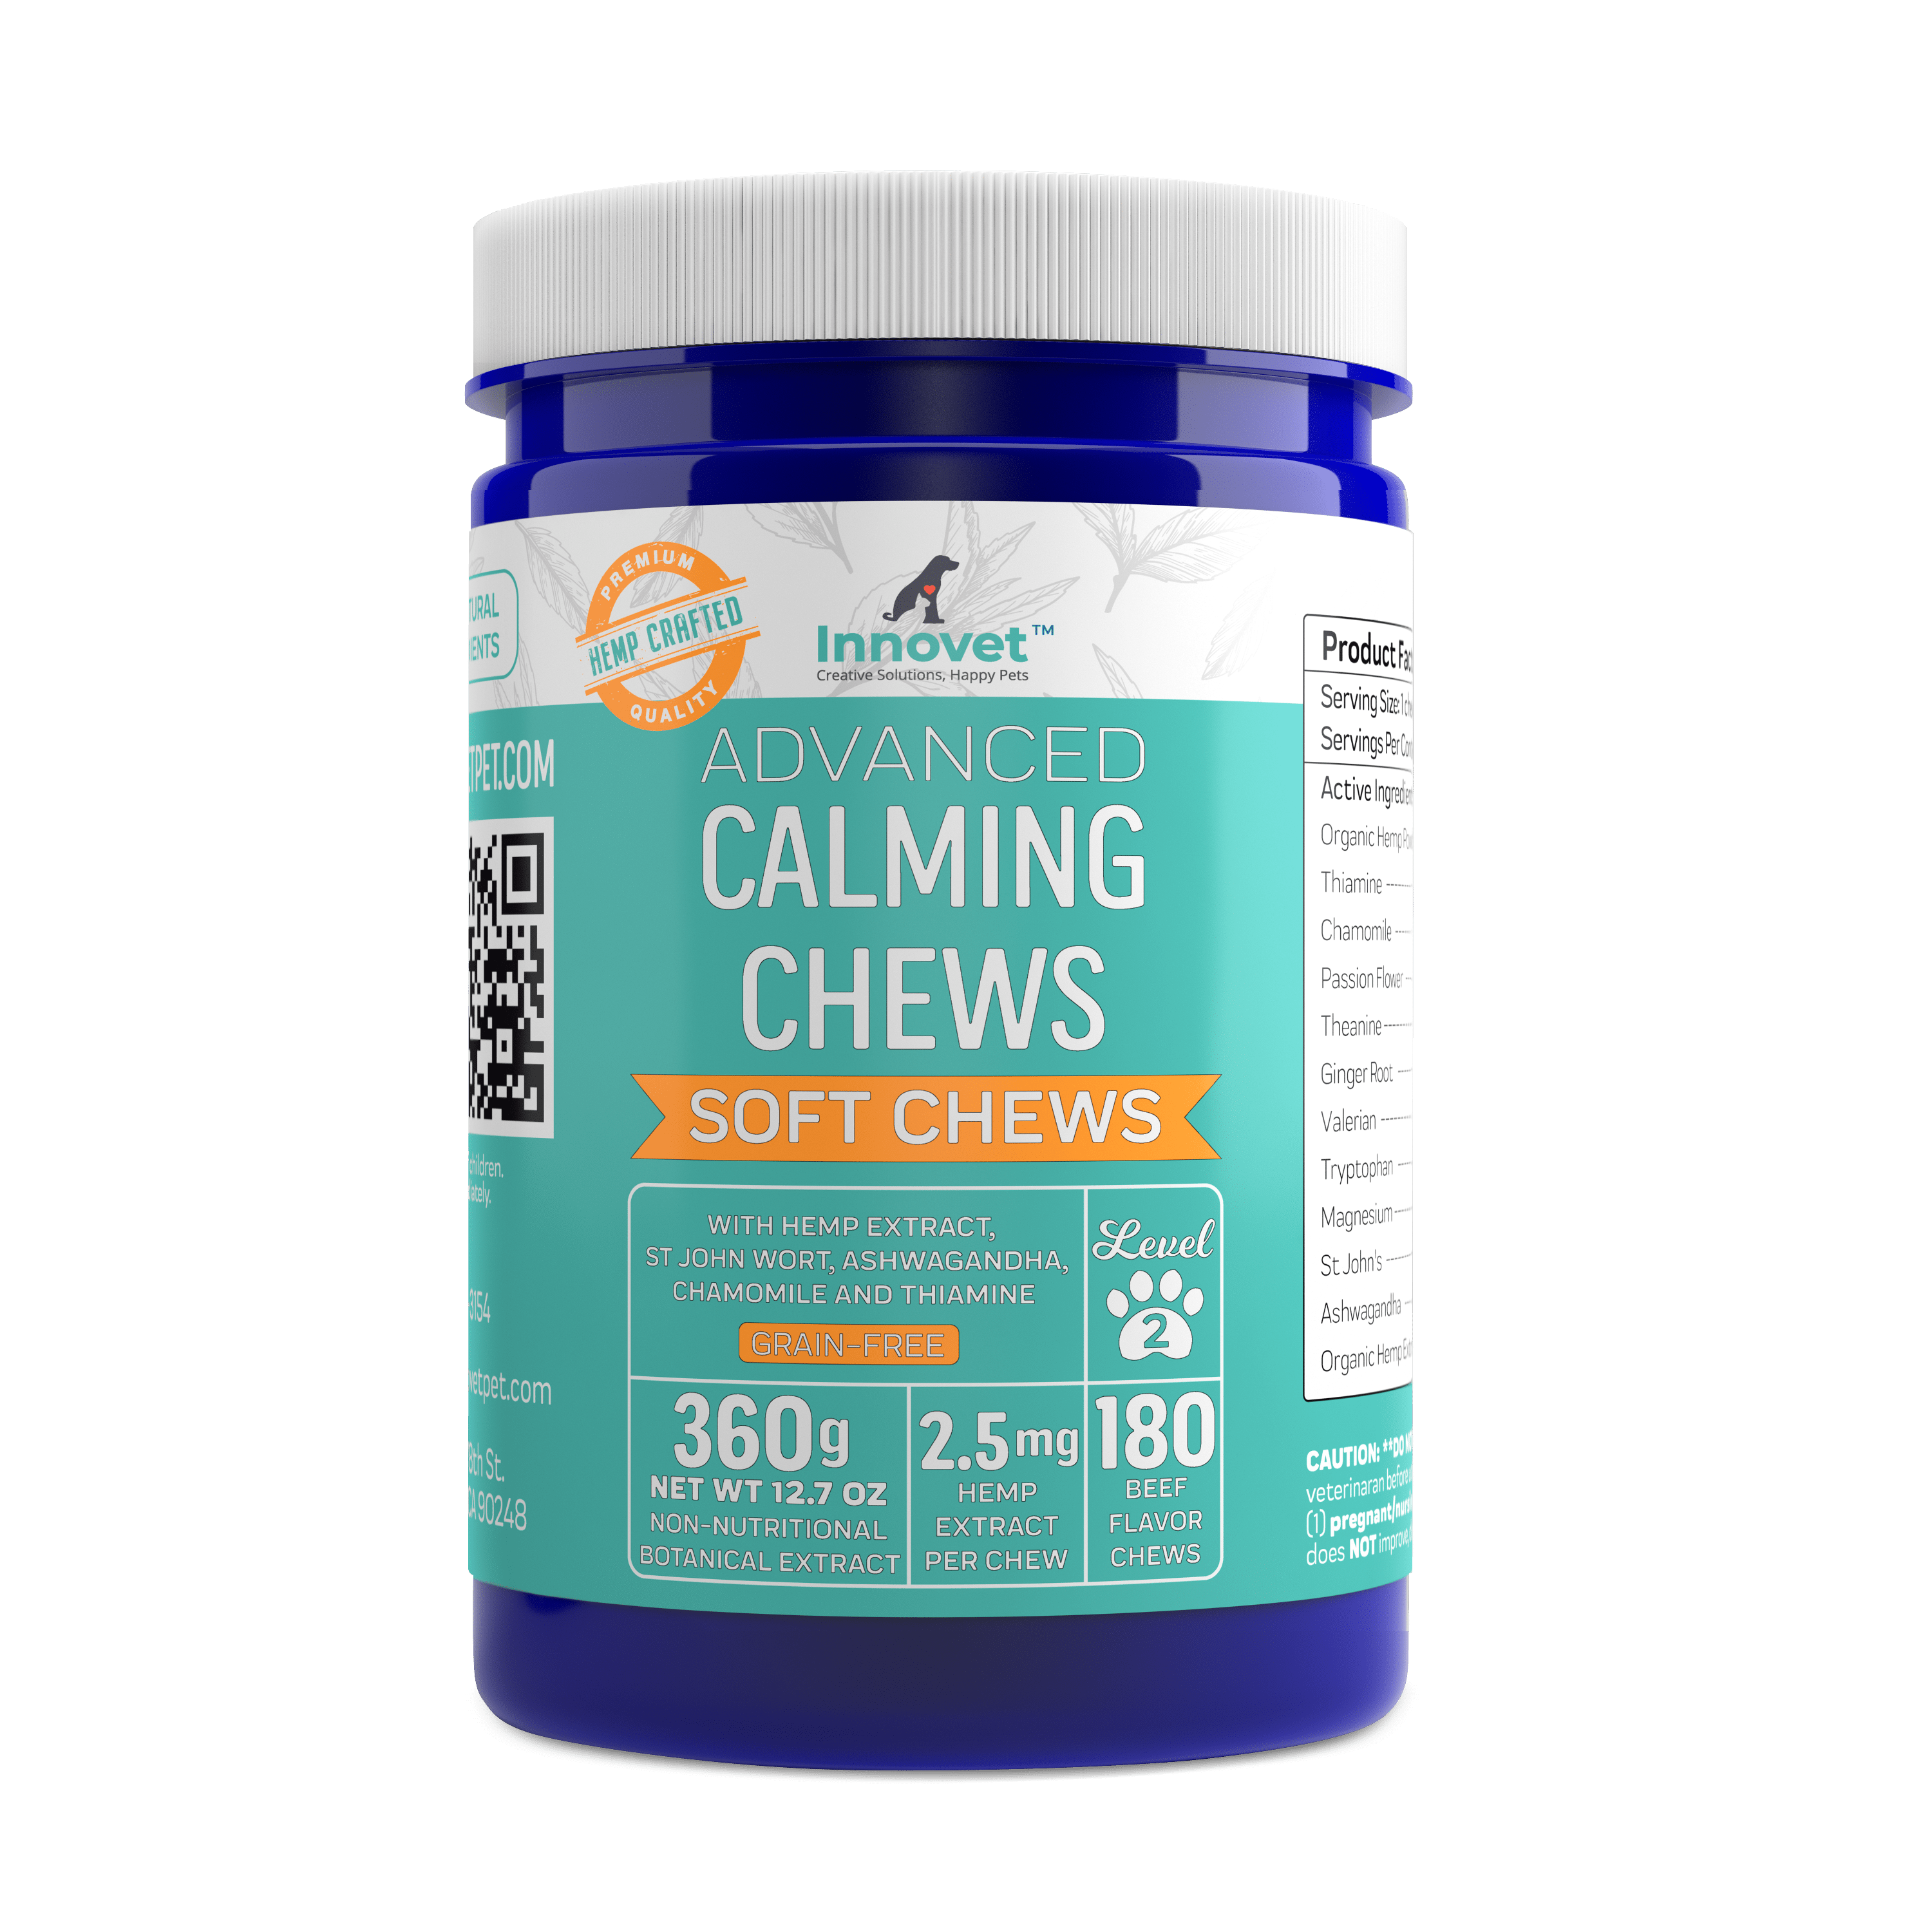 Advanced Calming Chews